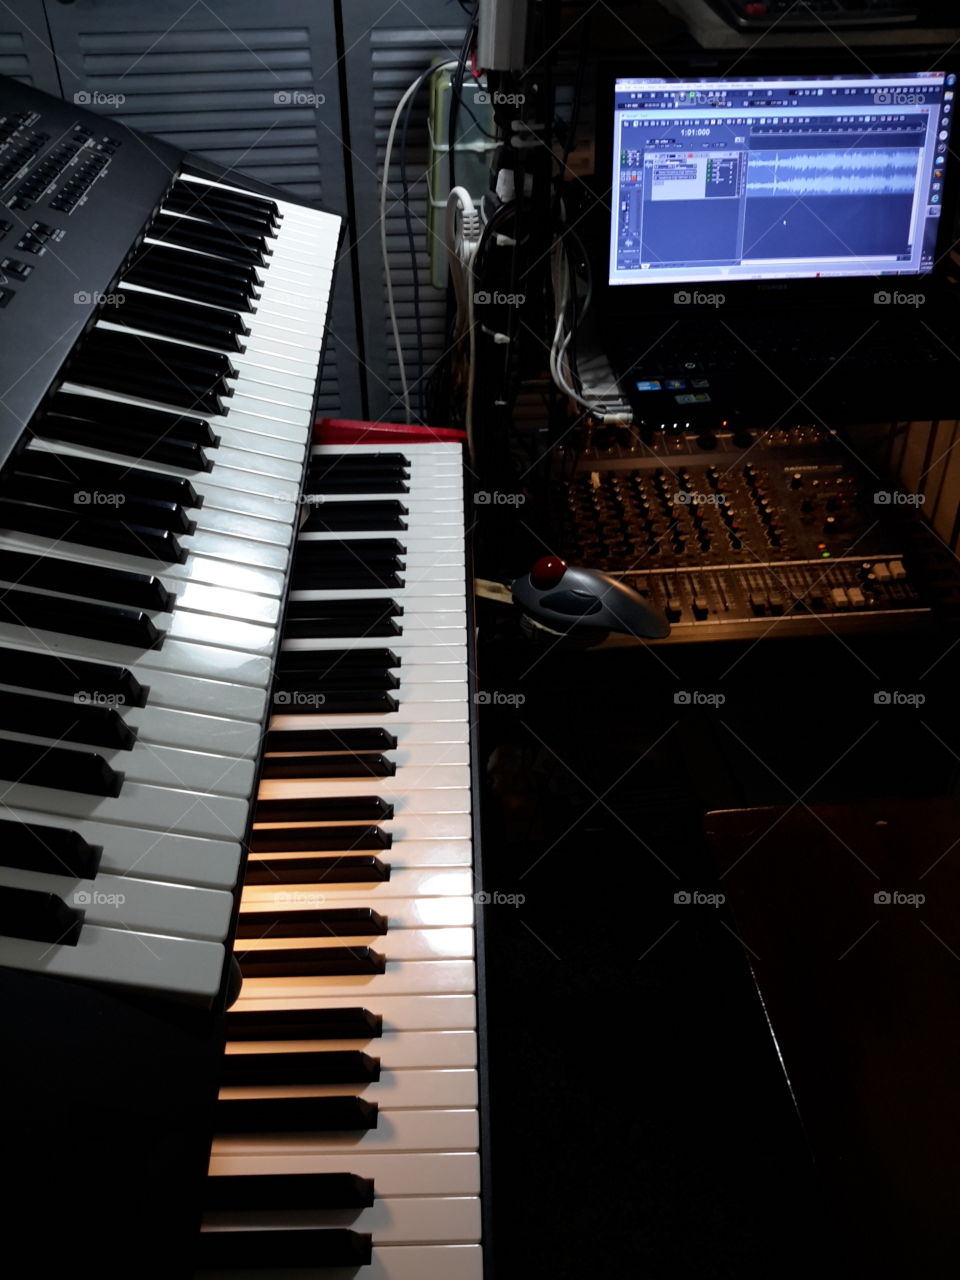 keyboards in studio. Keyboards in home music studio